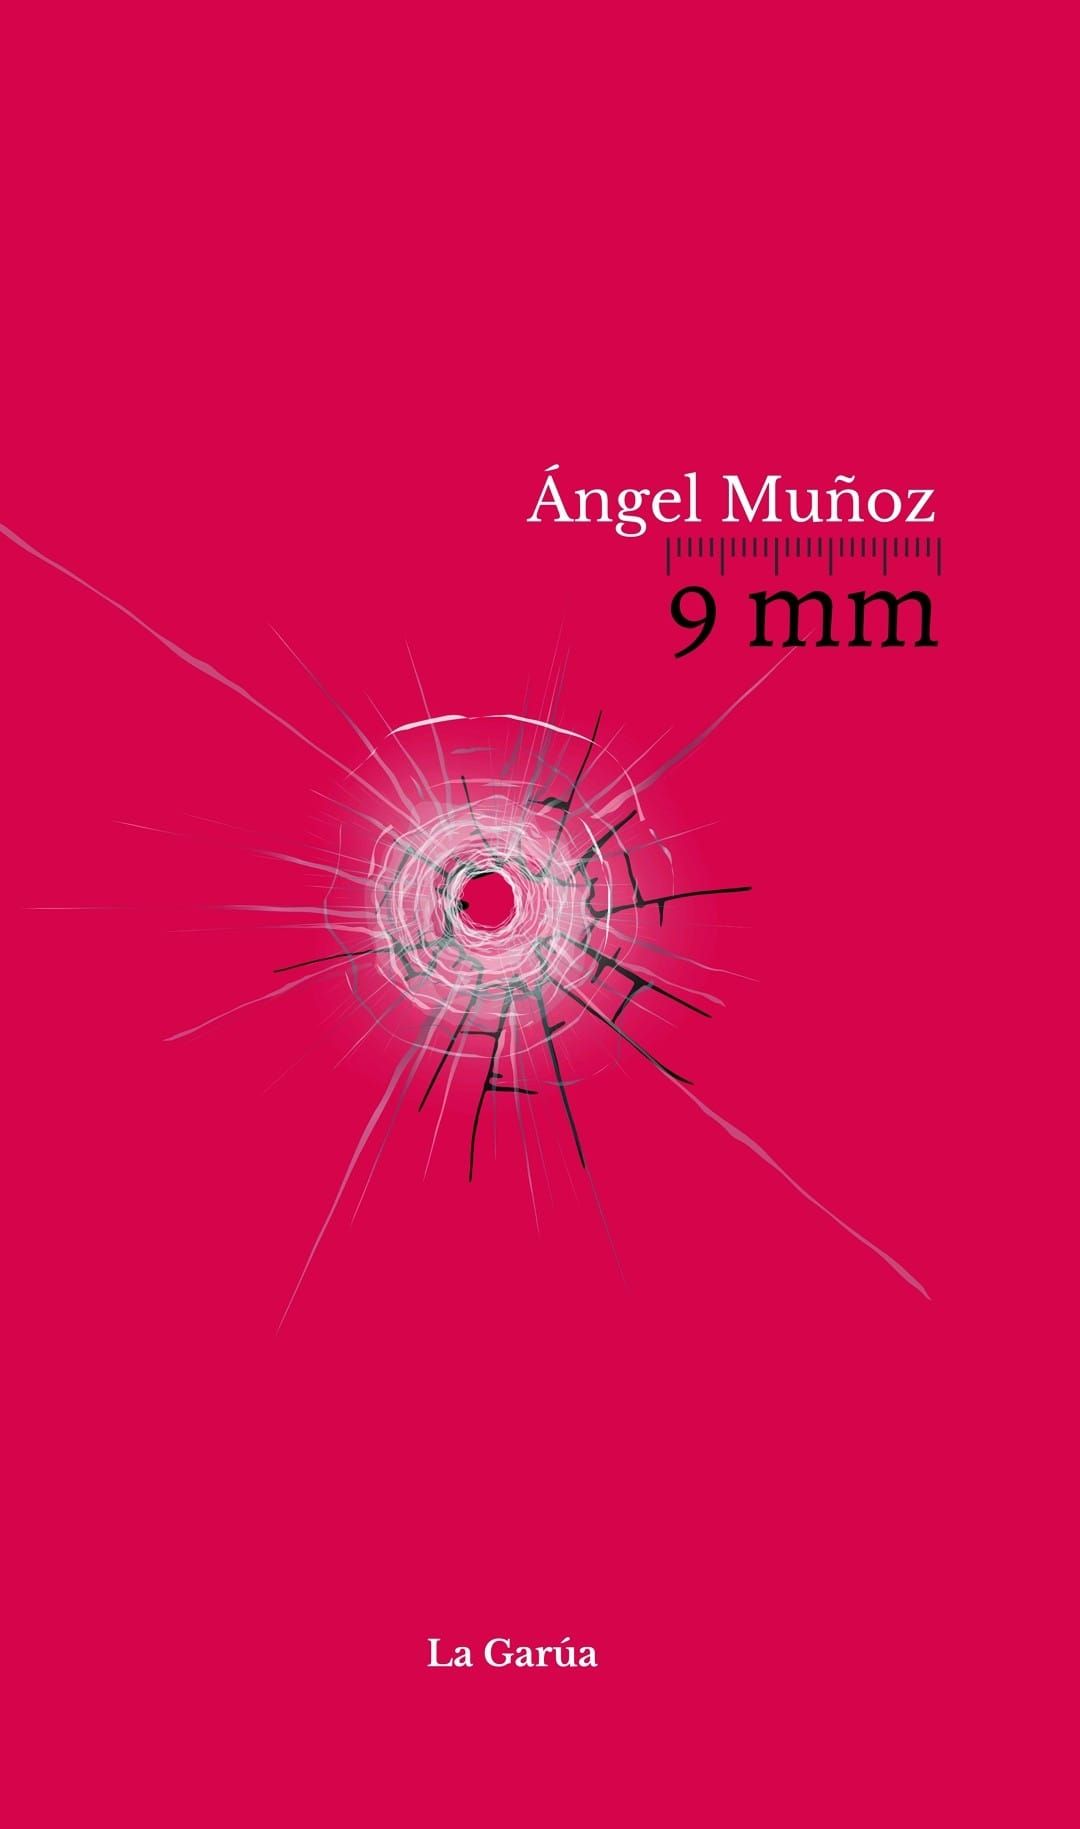 Portada de "9mm", de Ángel Muñoz.